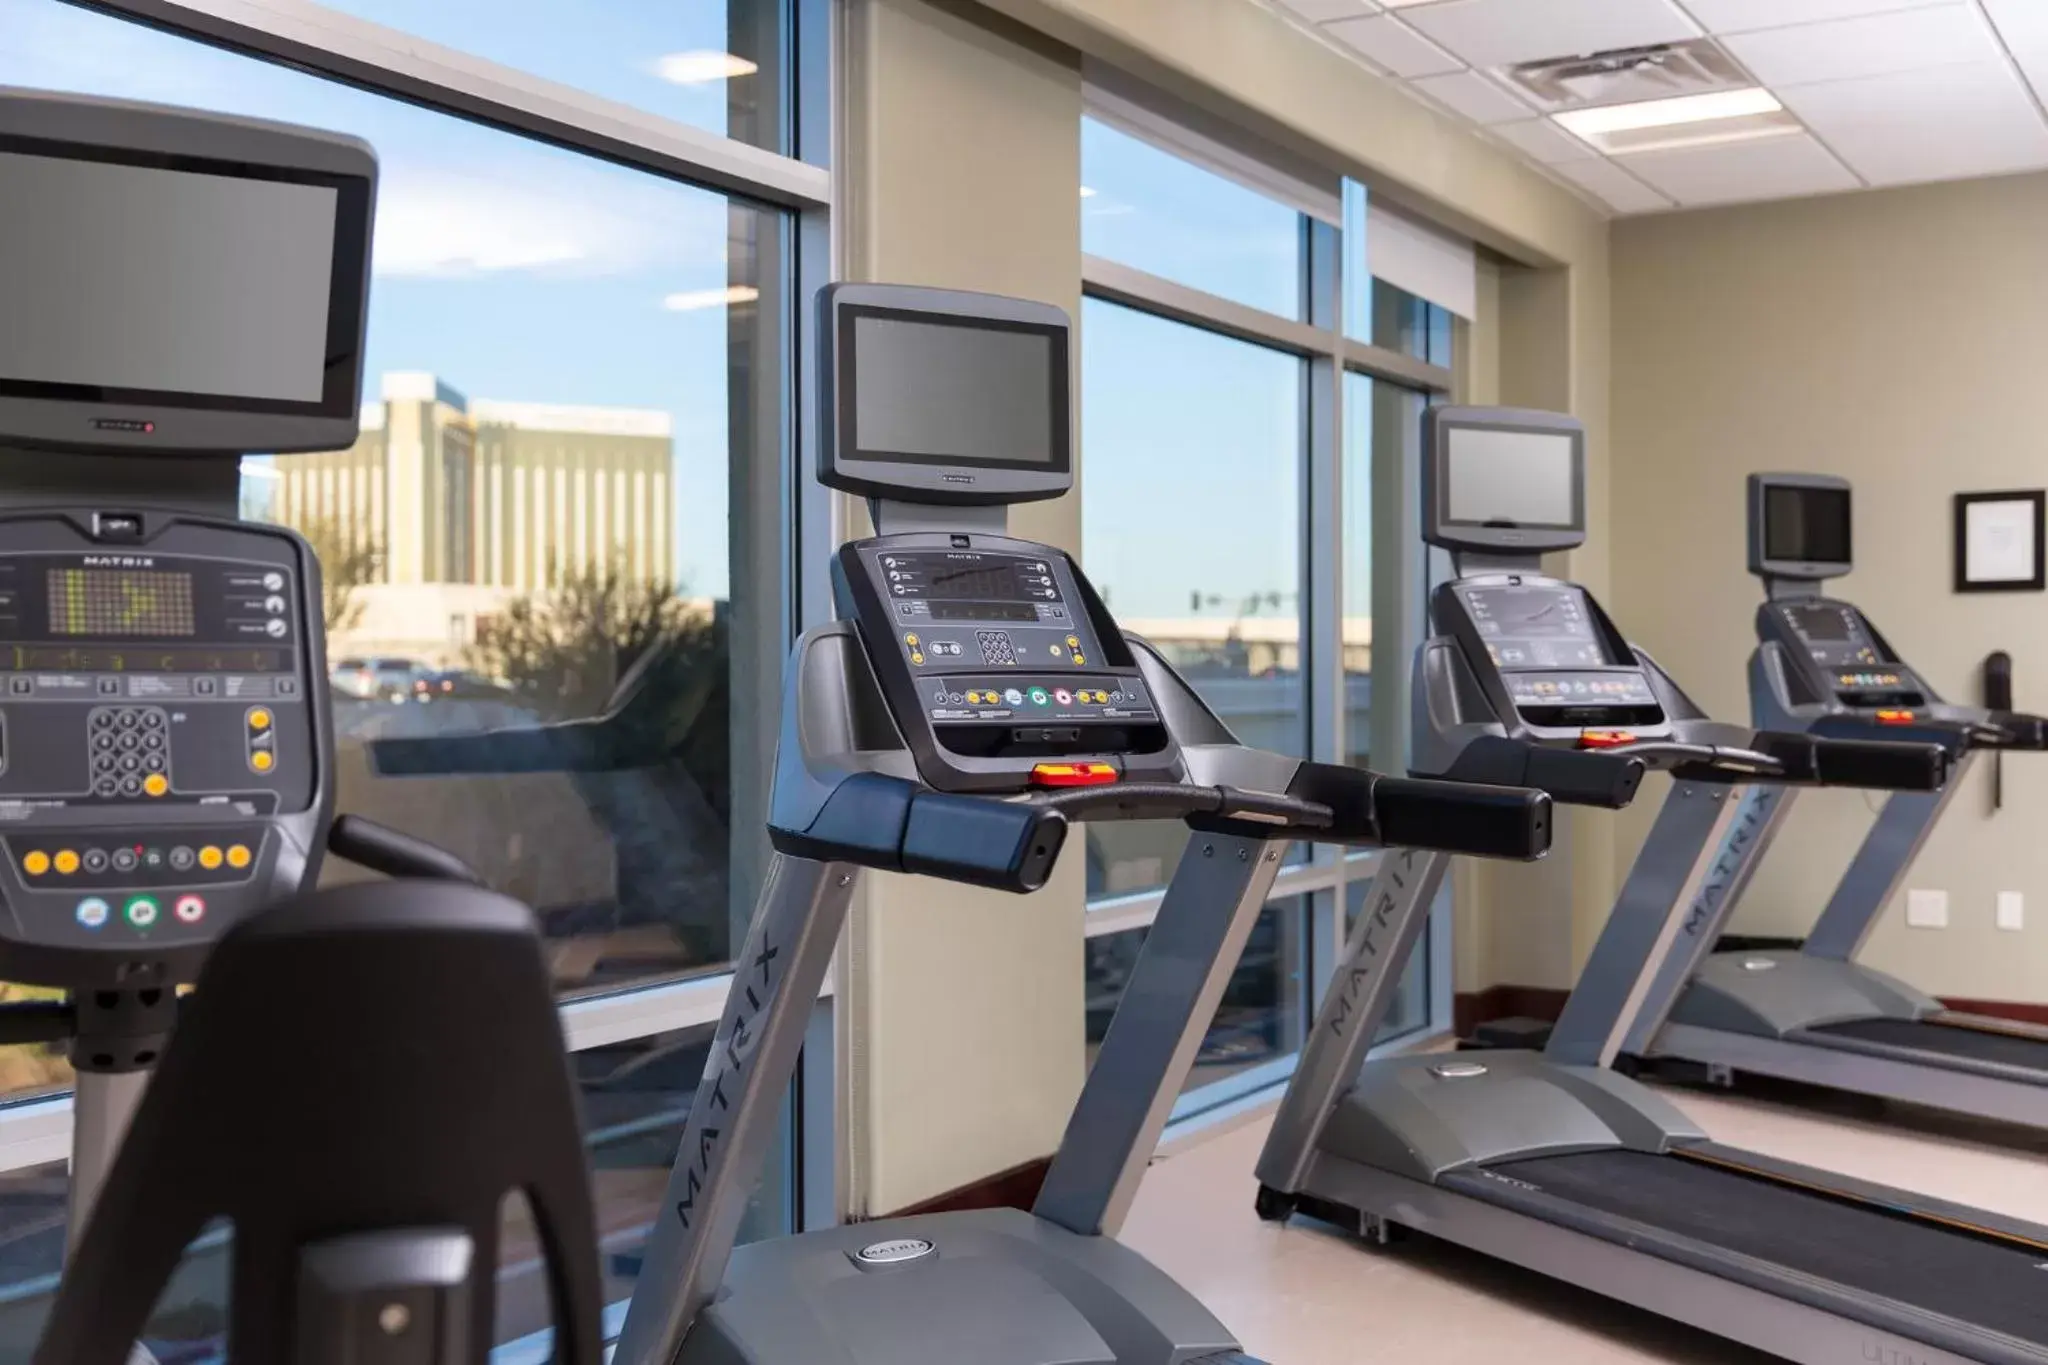 Fitness centre/facilities, Fitness Center/Facilities in Staybridge Suites Las Vegas - Stadium District